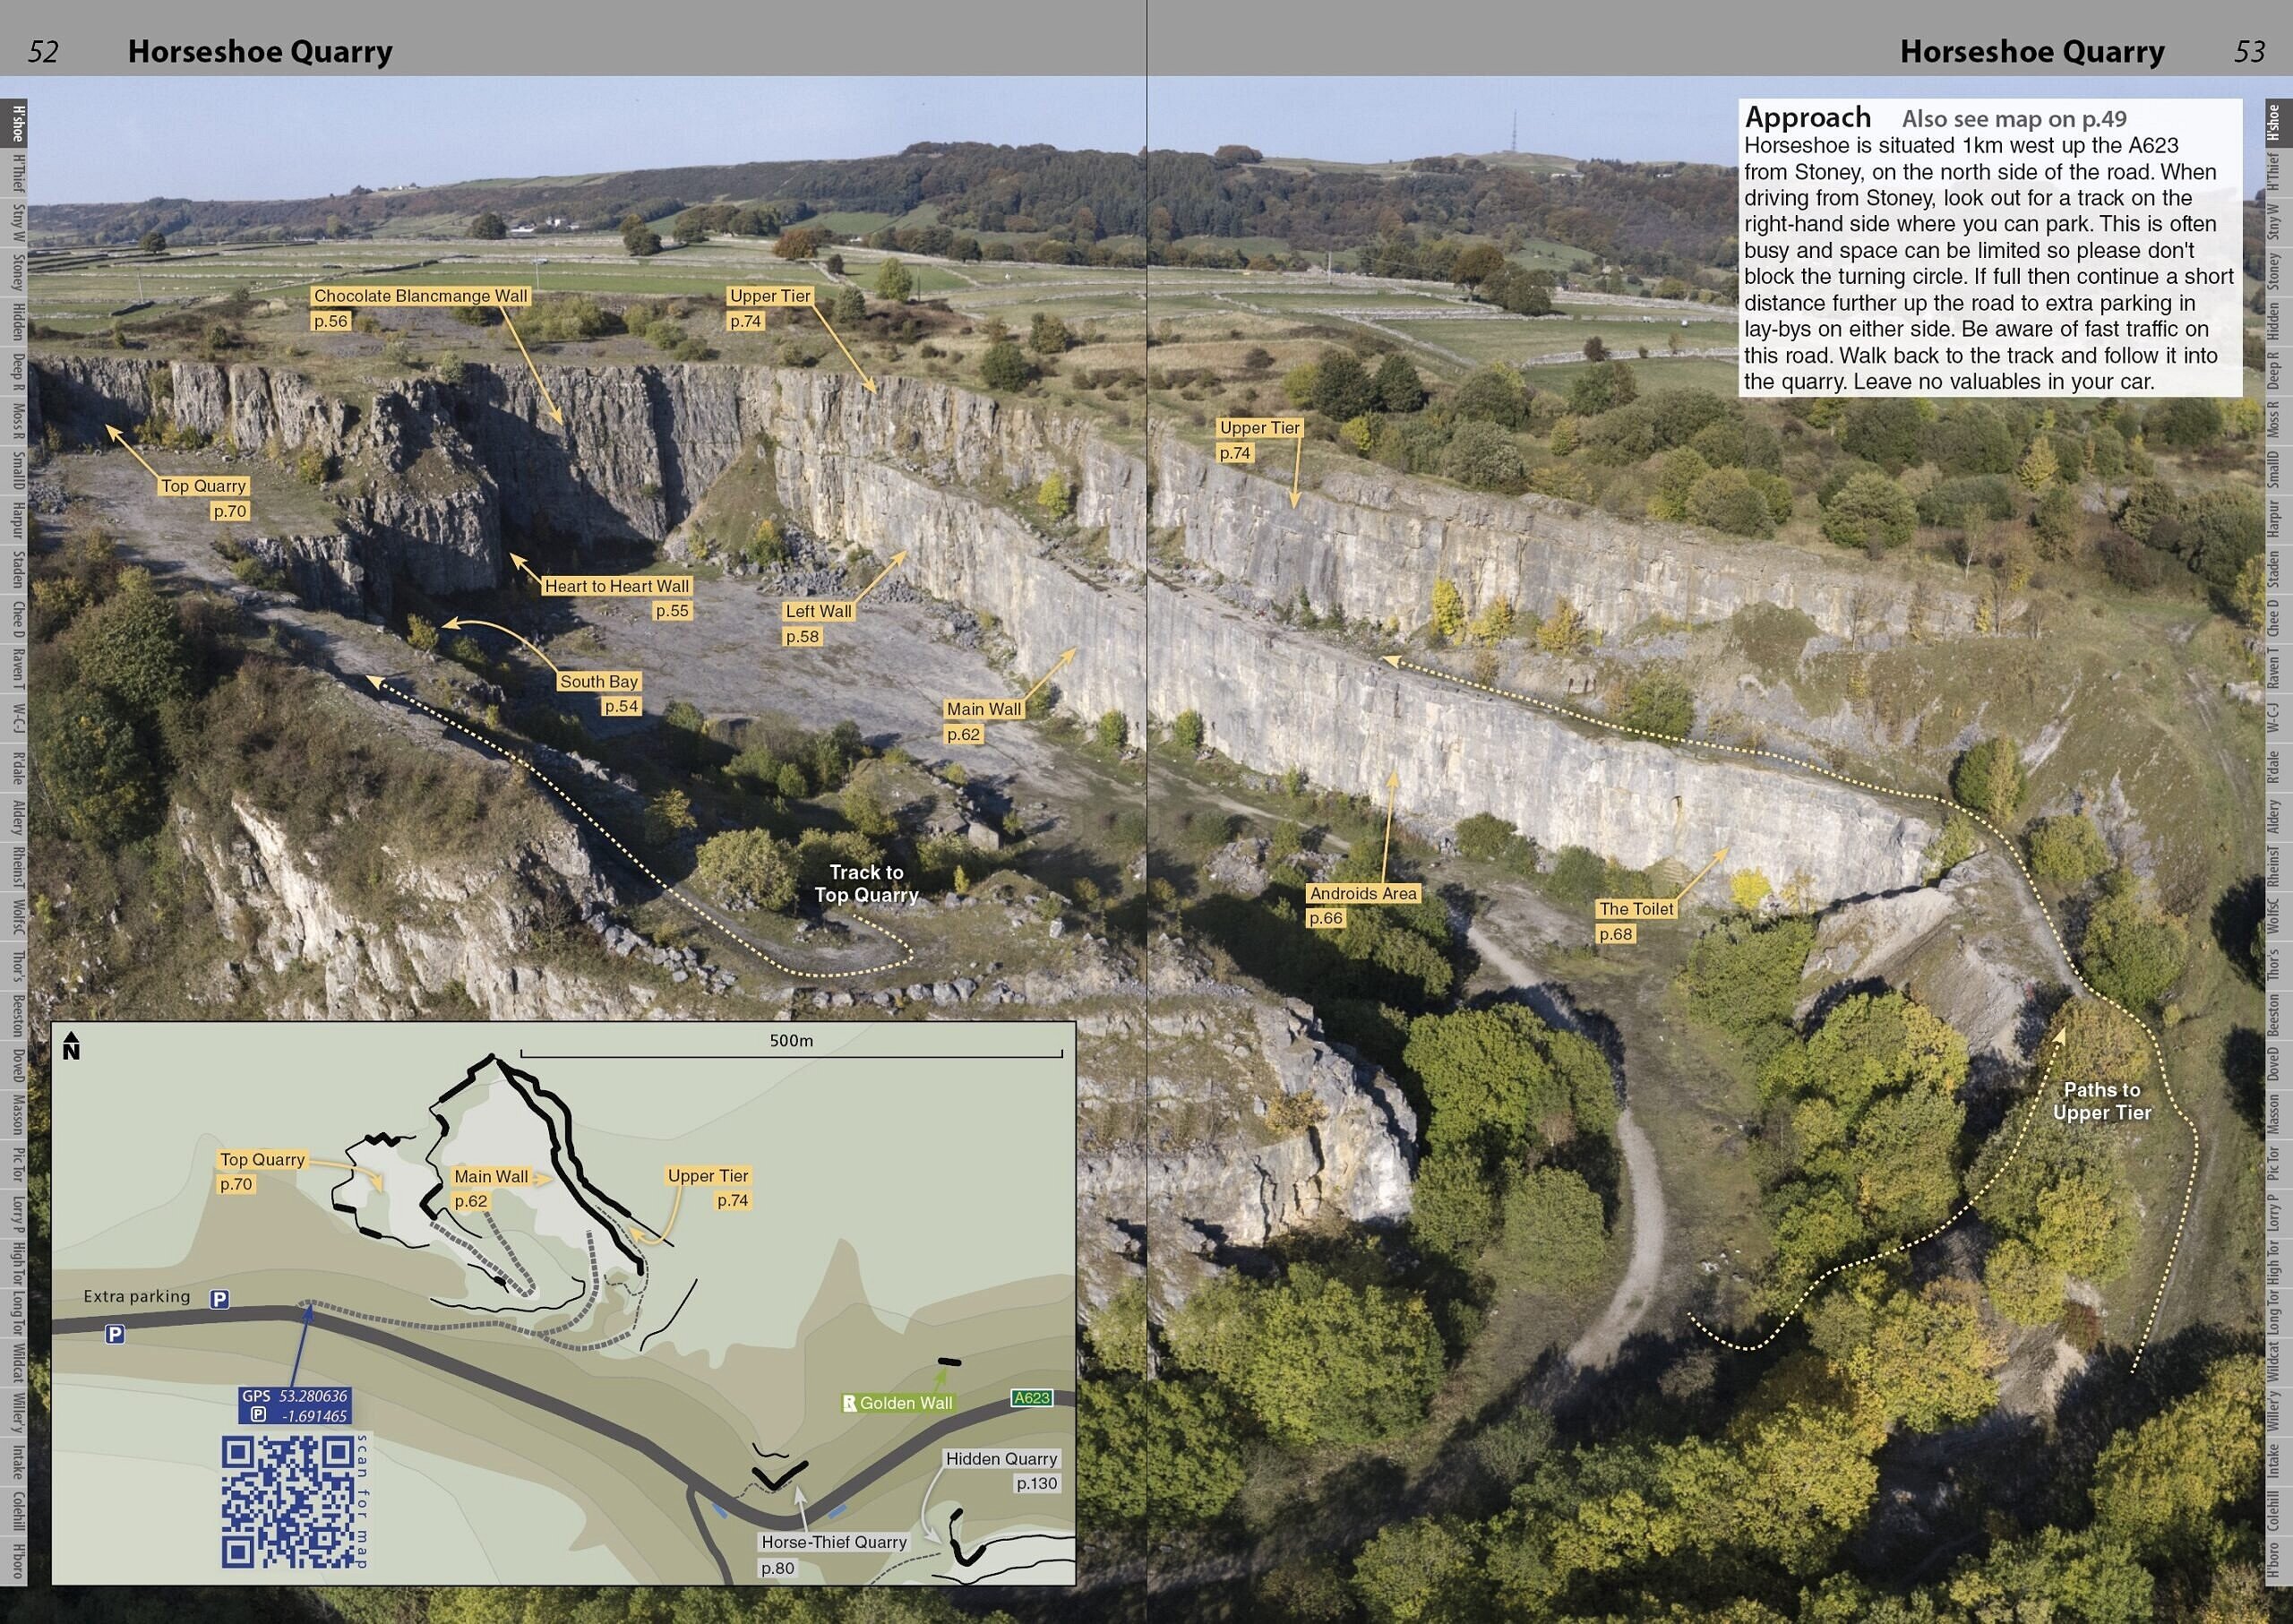 Horseshoe Quarry overview from Peak Limestone Rockfax  © Rockfax